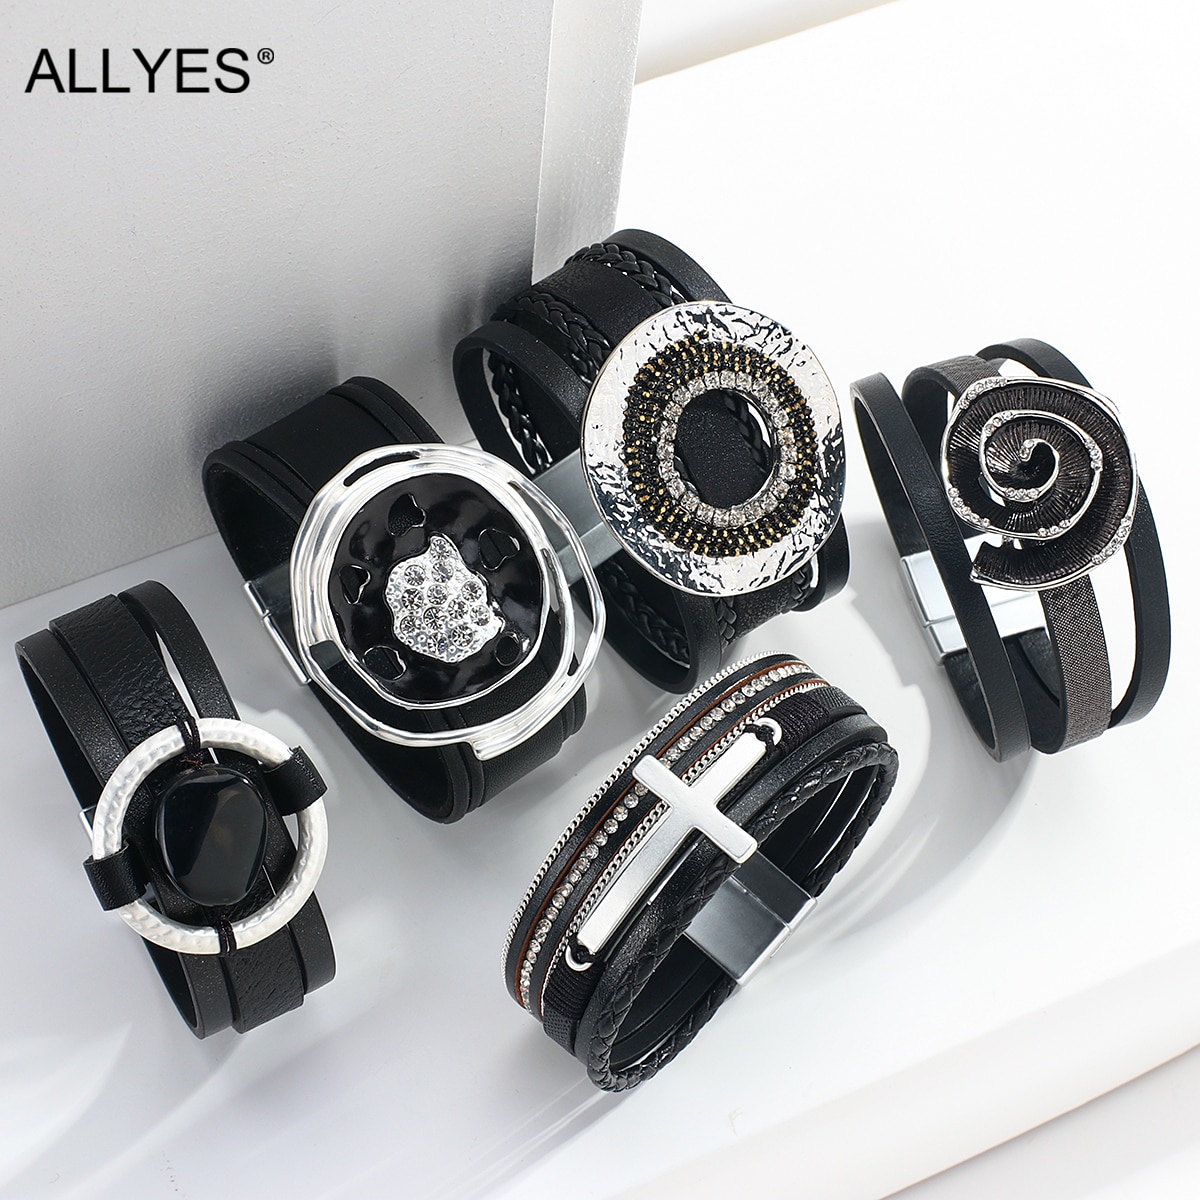 Allyes Metalen Charm Multilayers Zwart Lederen Armbanden Voor Vrouwen Gothic Punk Wrap Armband Unisex Party Casual Sieraden